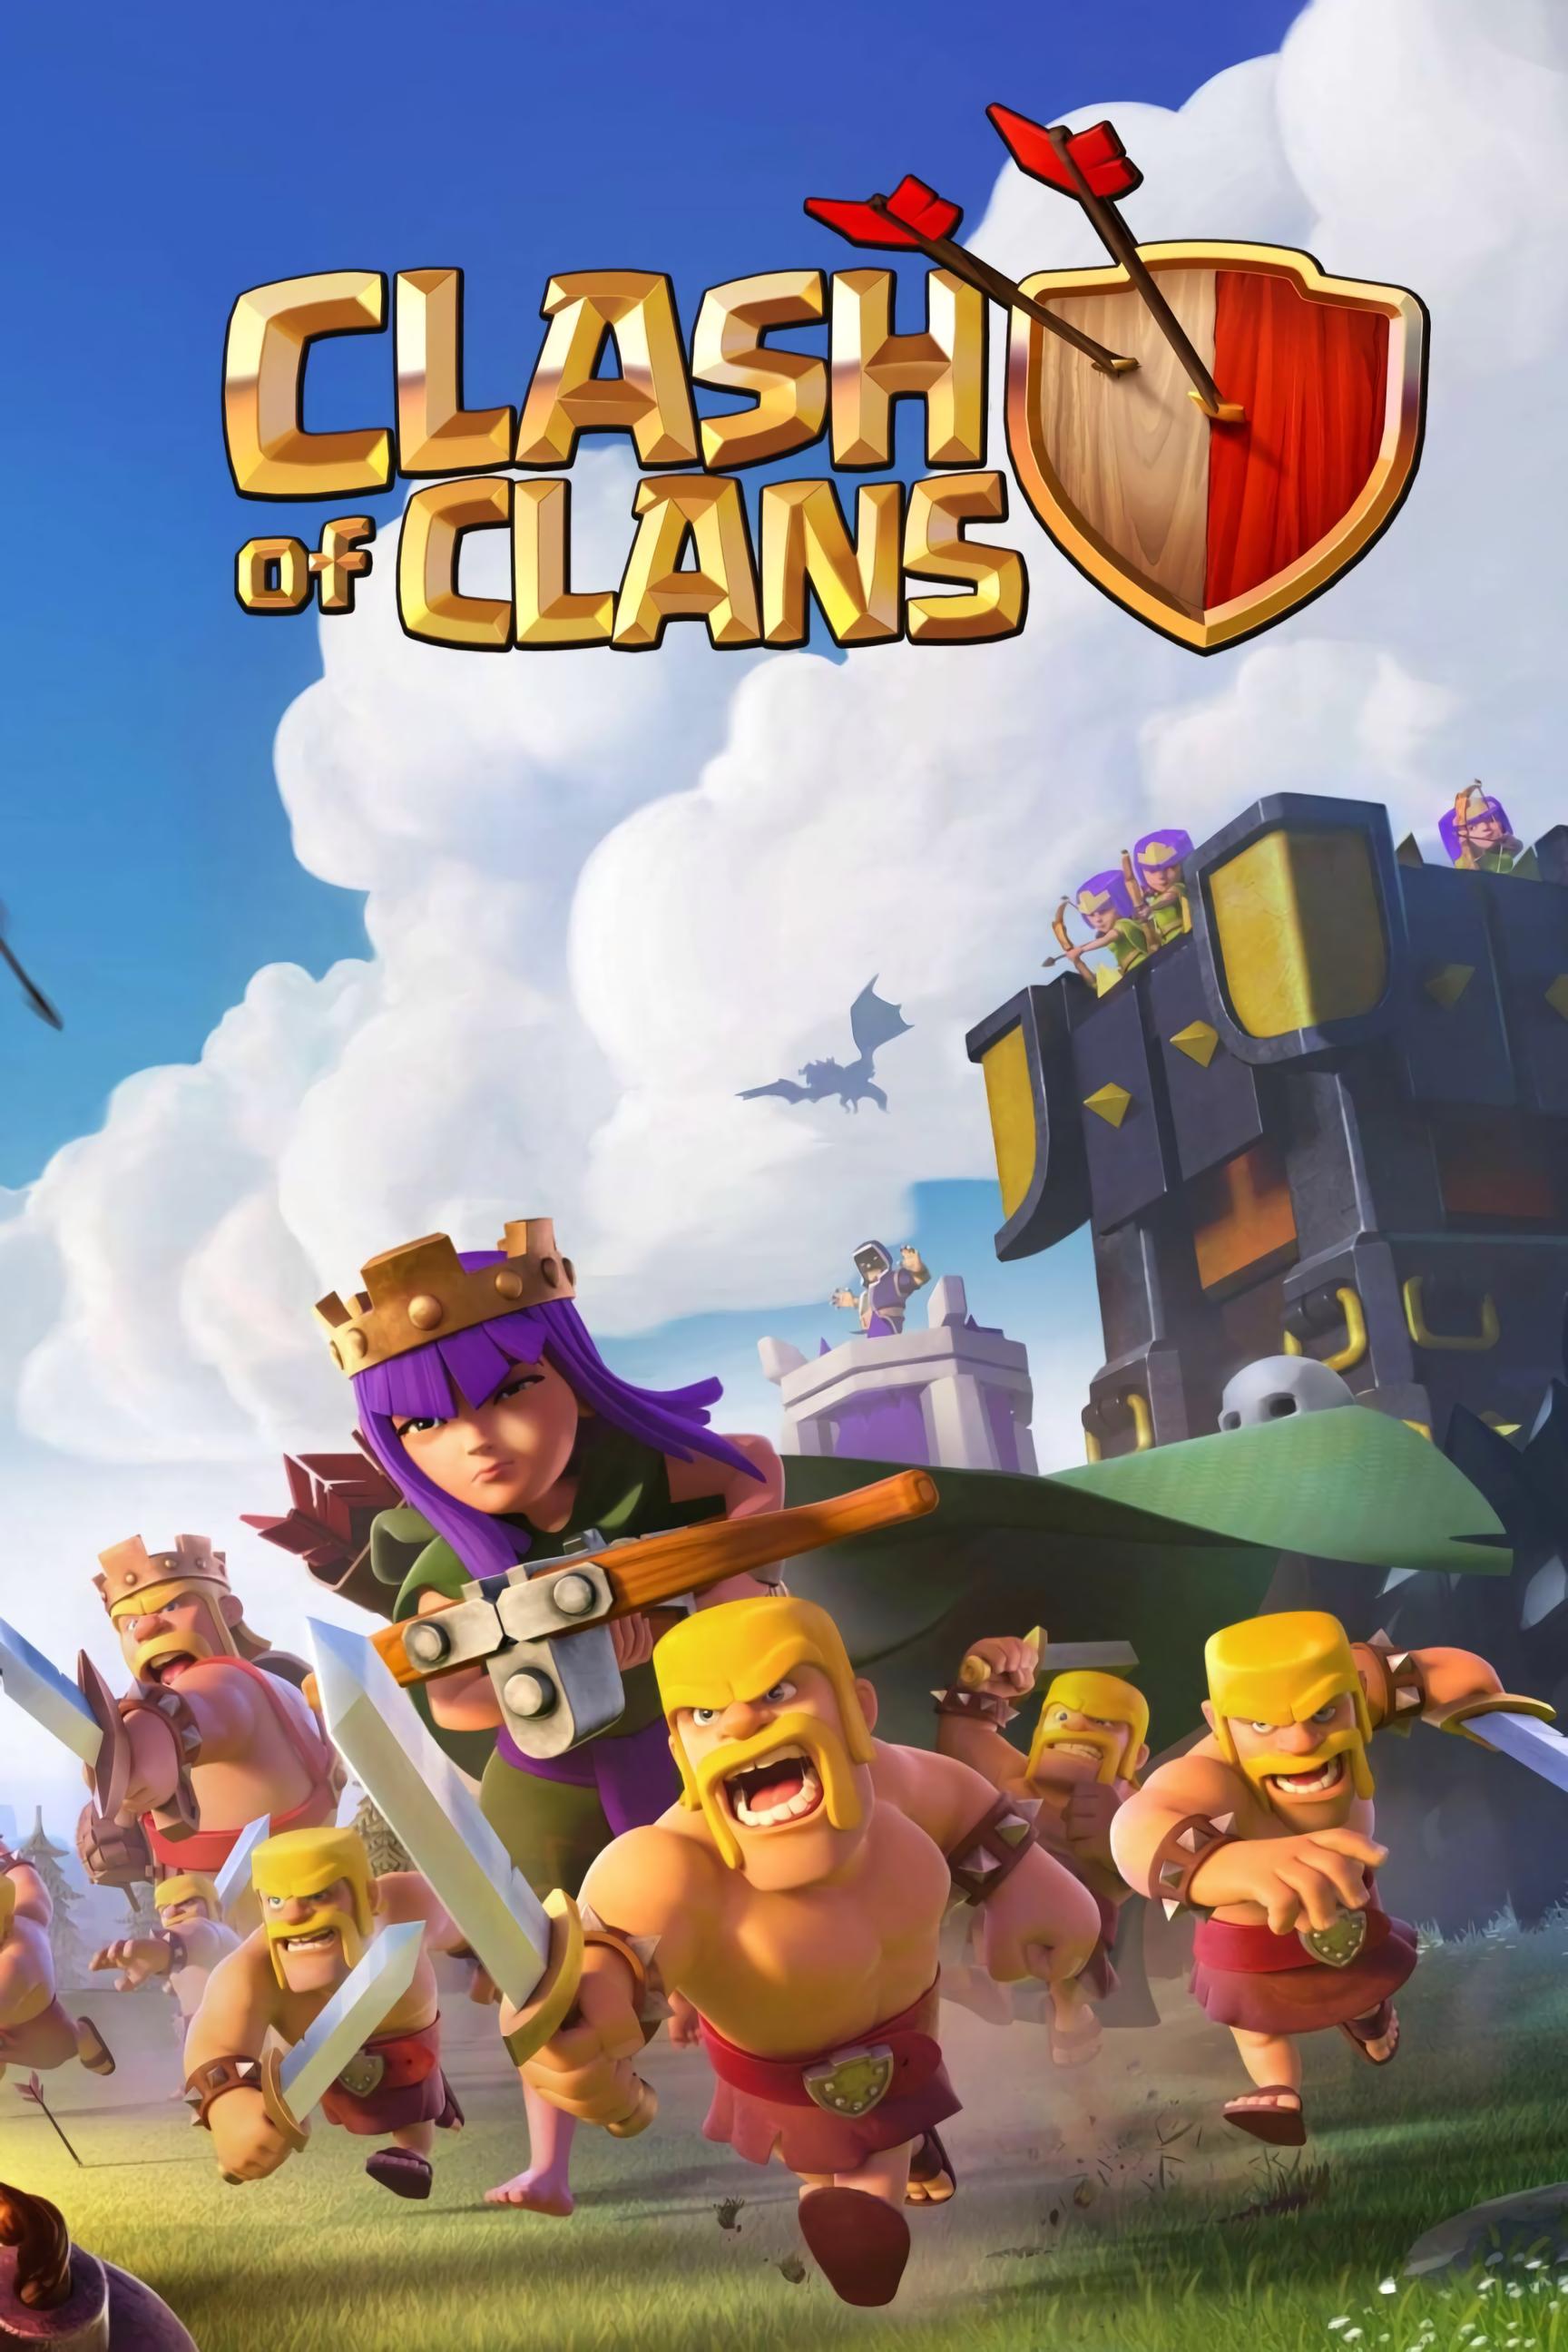 Clans of clans download. Клэш оф кланс. Клаш оф клан. Clash of Clans клан. Фото с игры Clash of Clans.